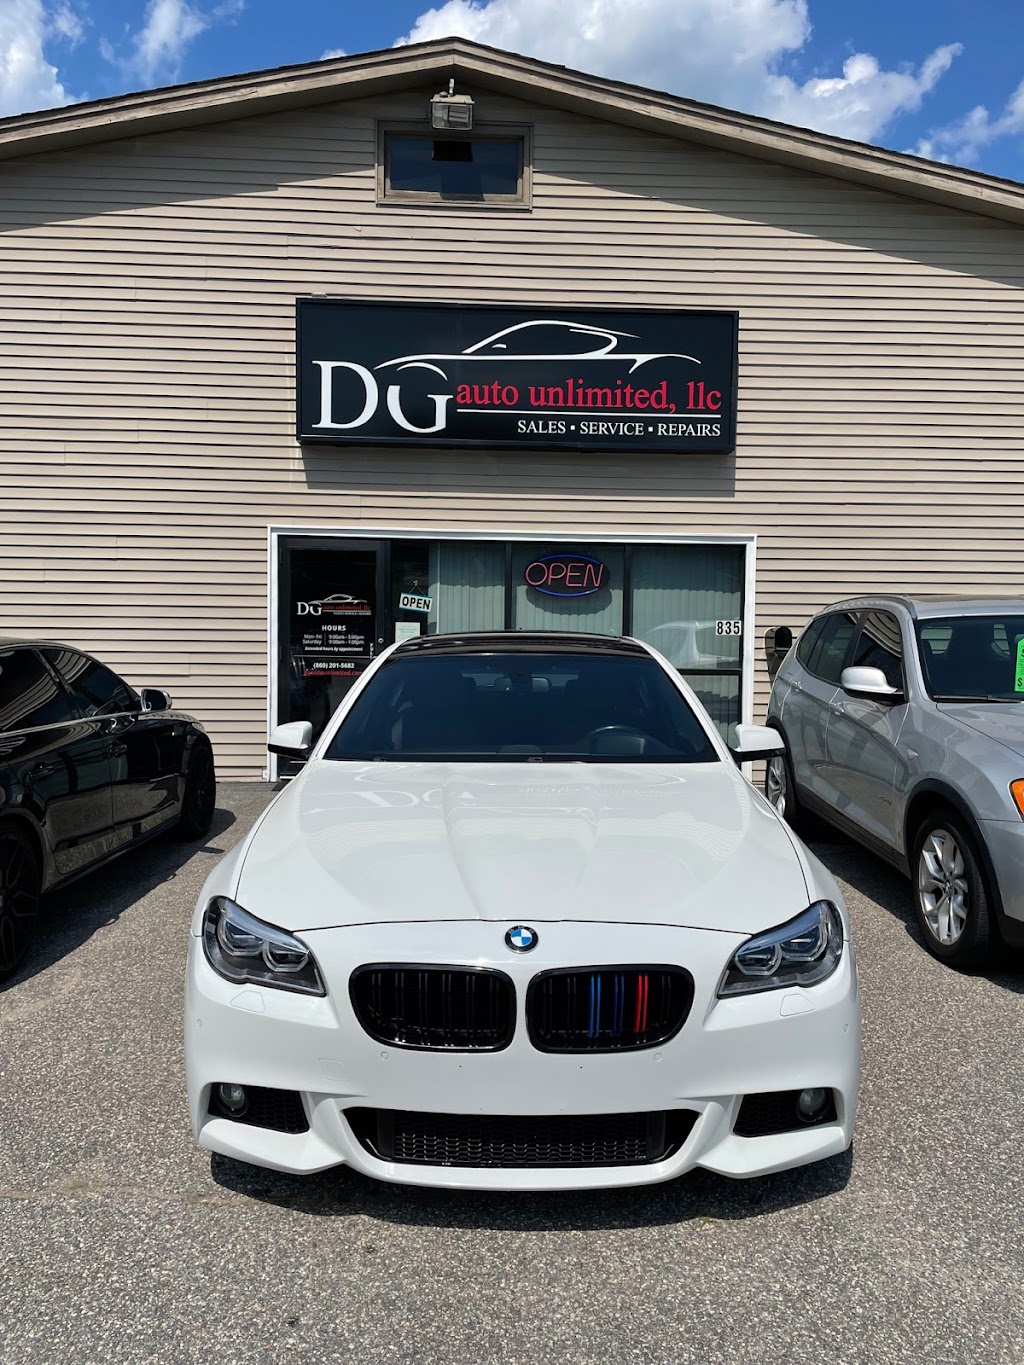 DG Auto Unlimited, LLC | 835 New Harwinton Rd, Torrington, CT 06790 | Phone: (860) 201-5682